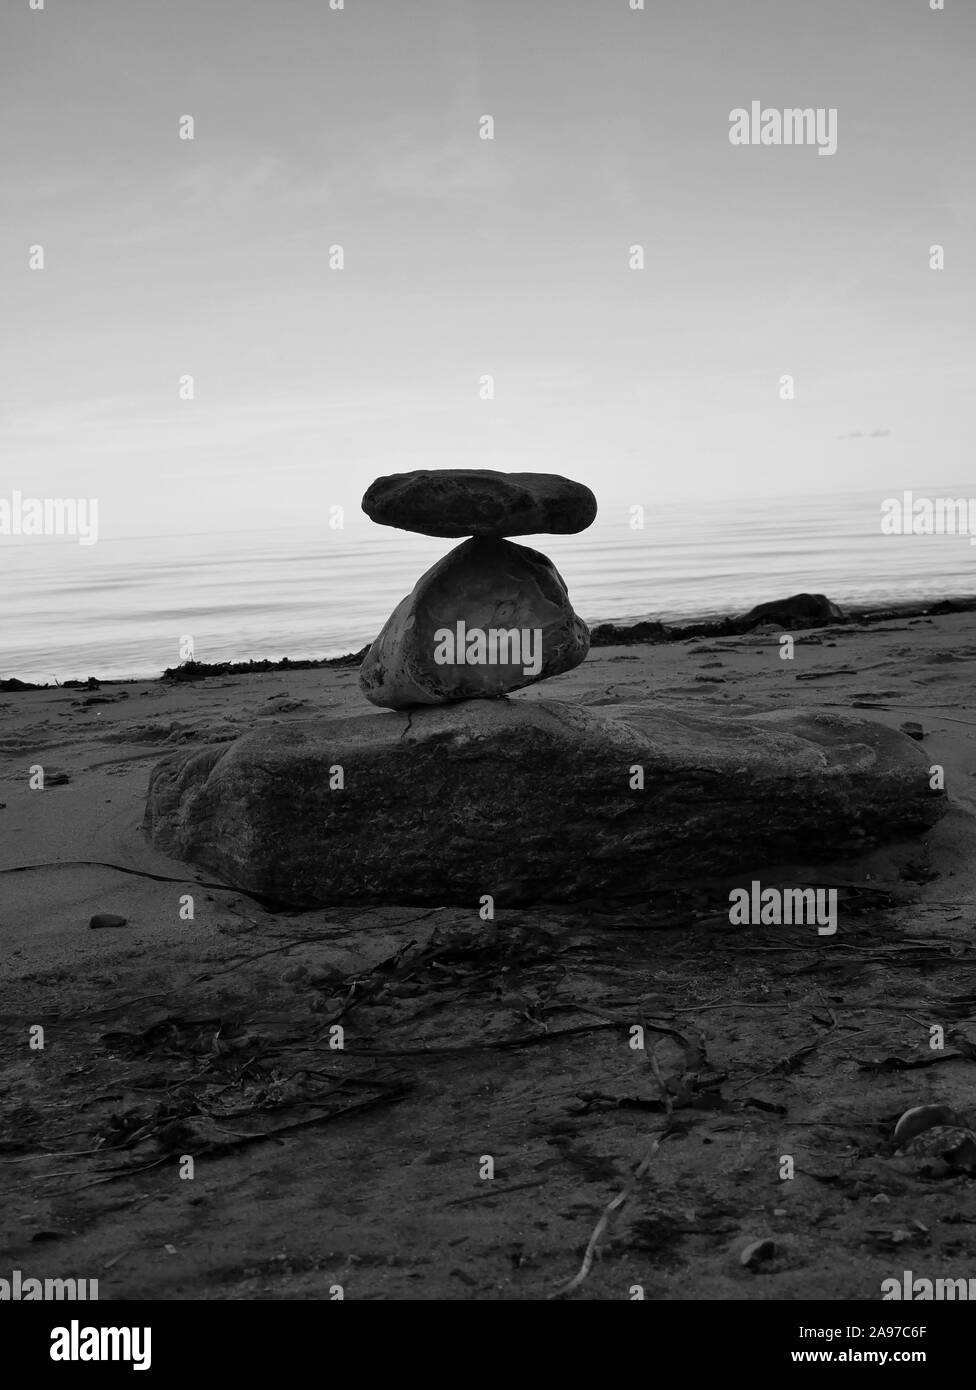 Balanced stone on a beach Stock Photo